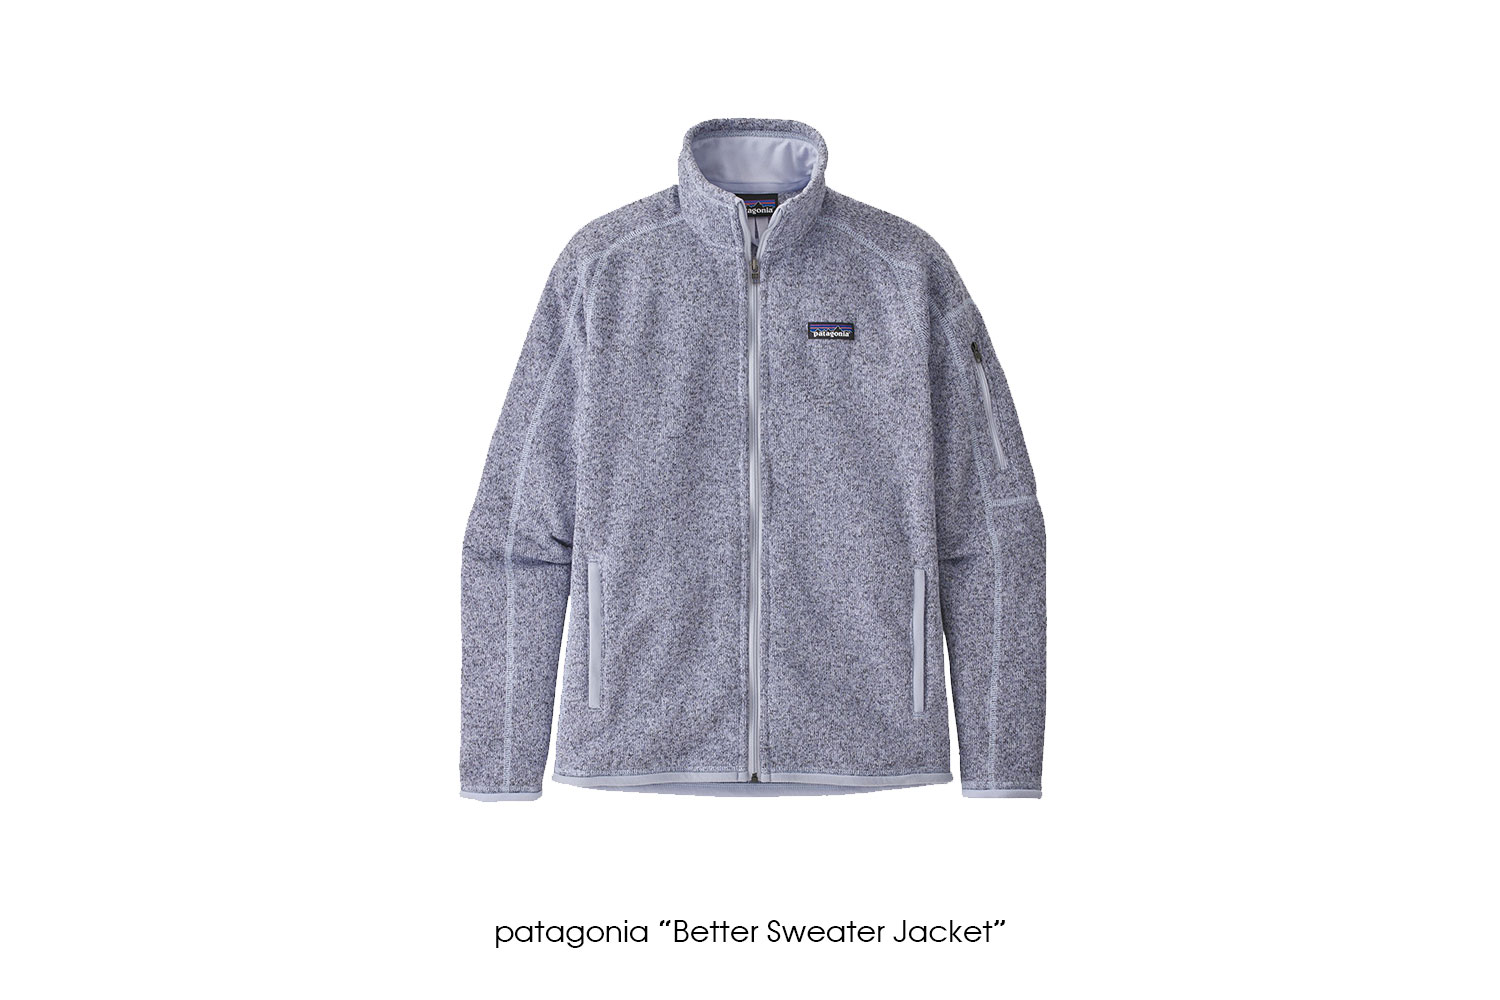 patagonia "Better Sweater Jacket"